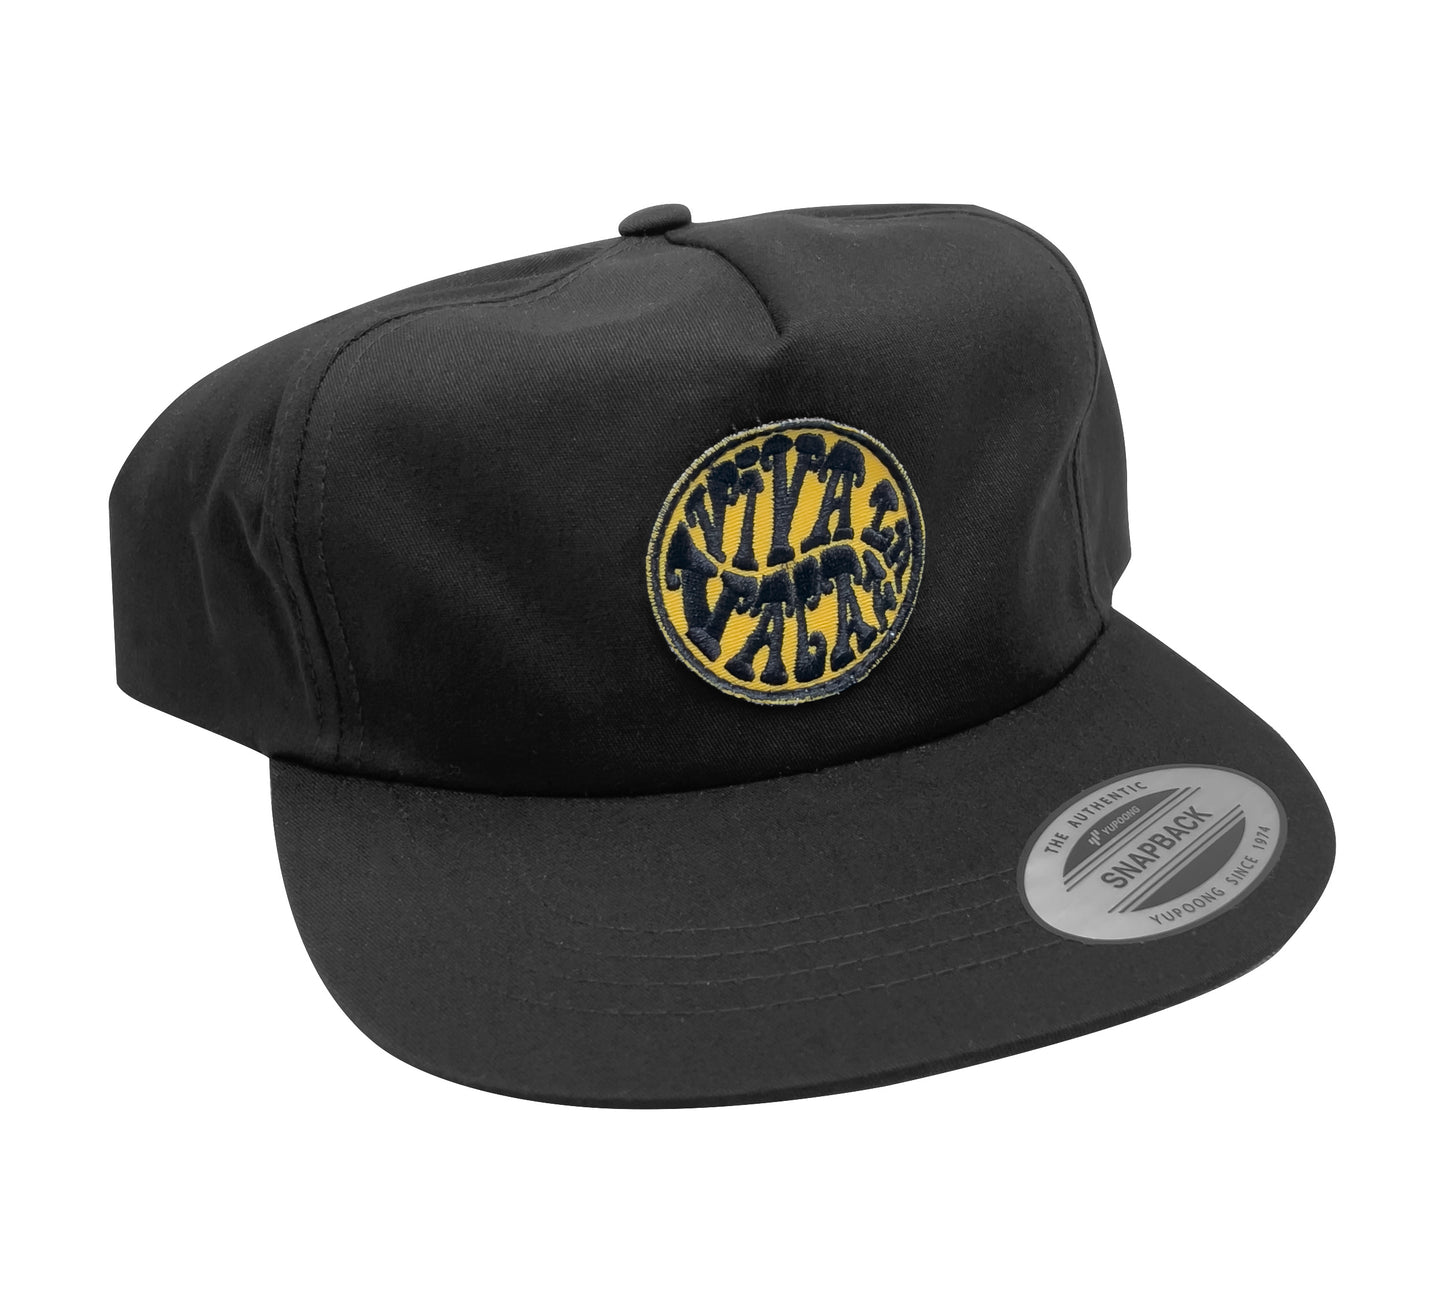 Viva Decade Hat - Black